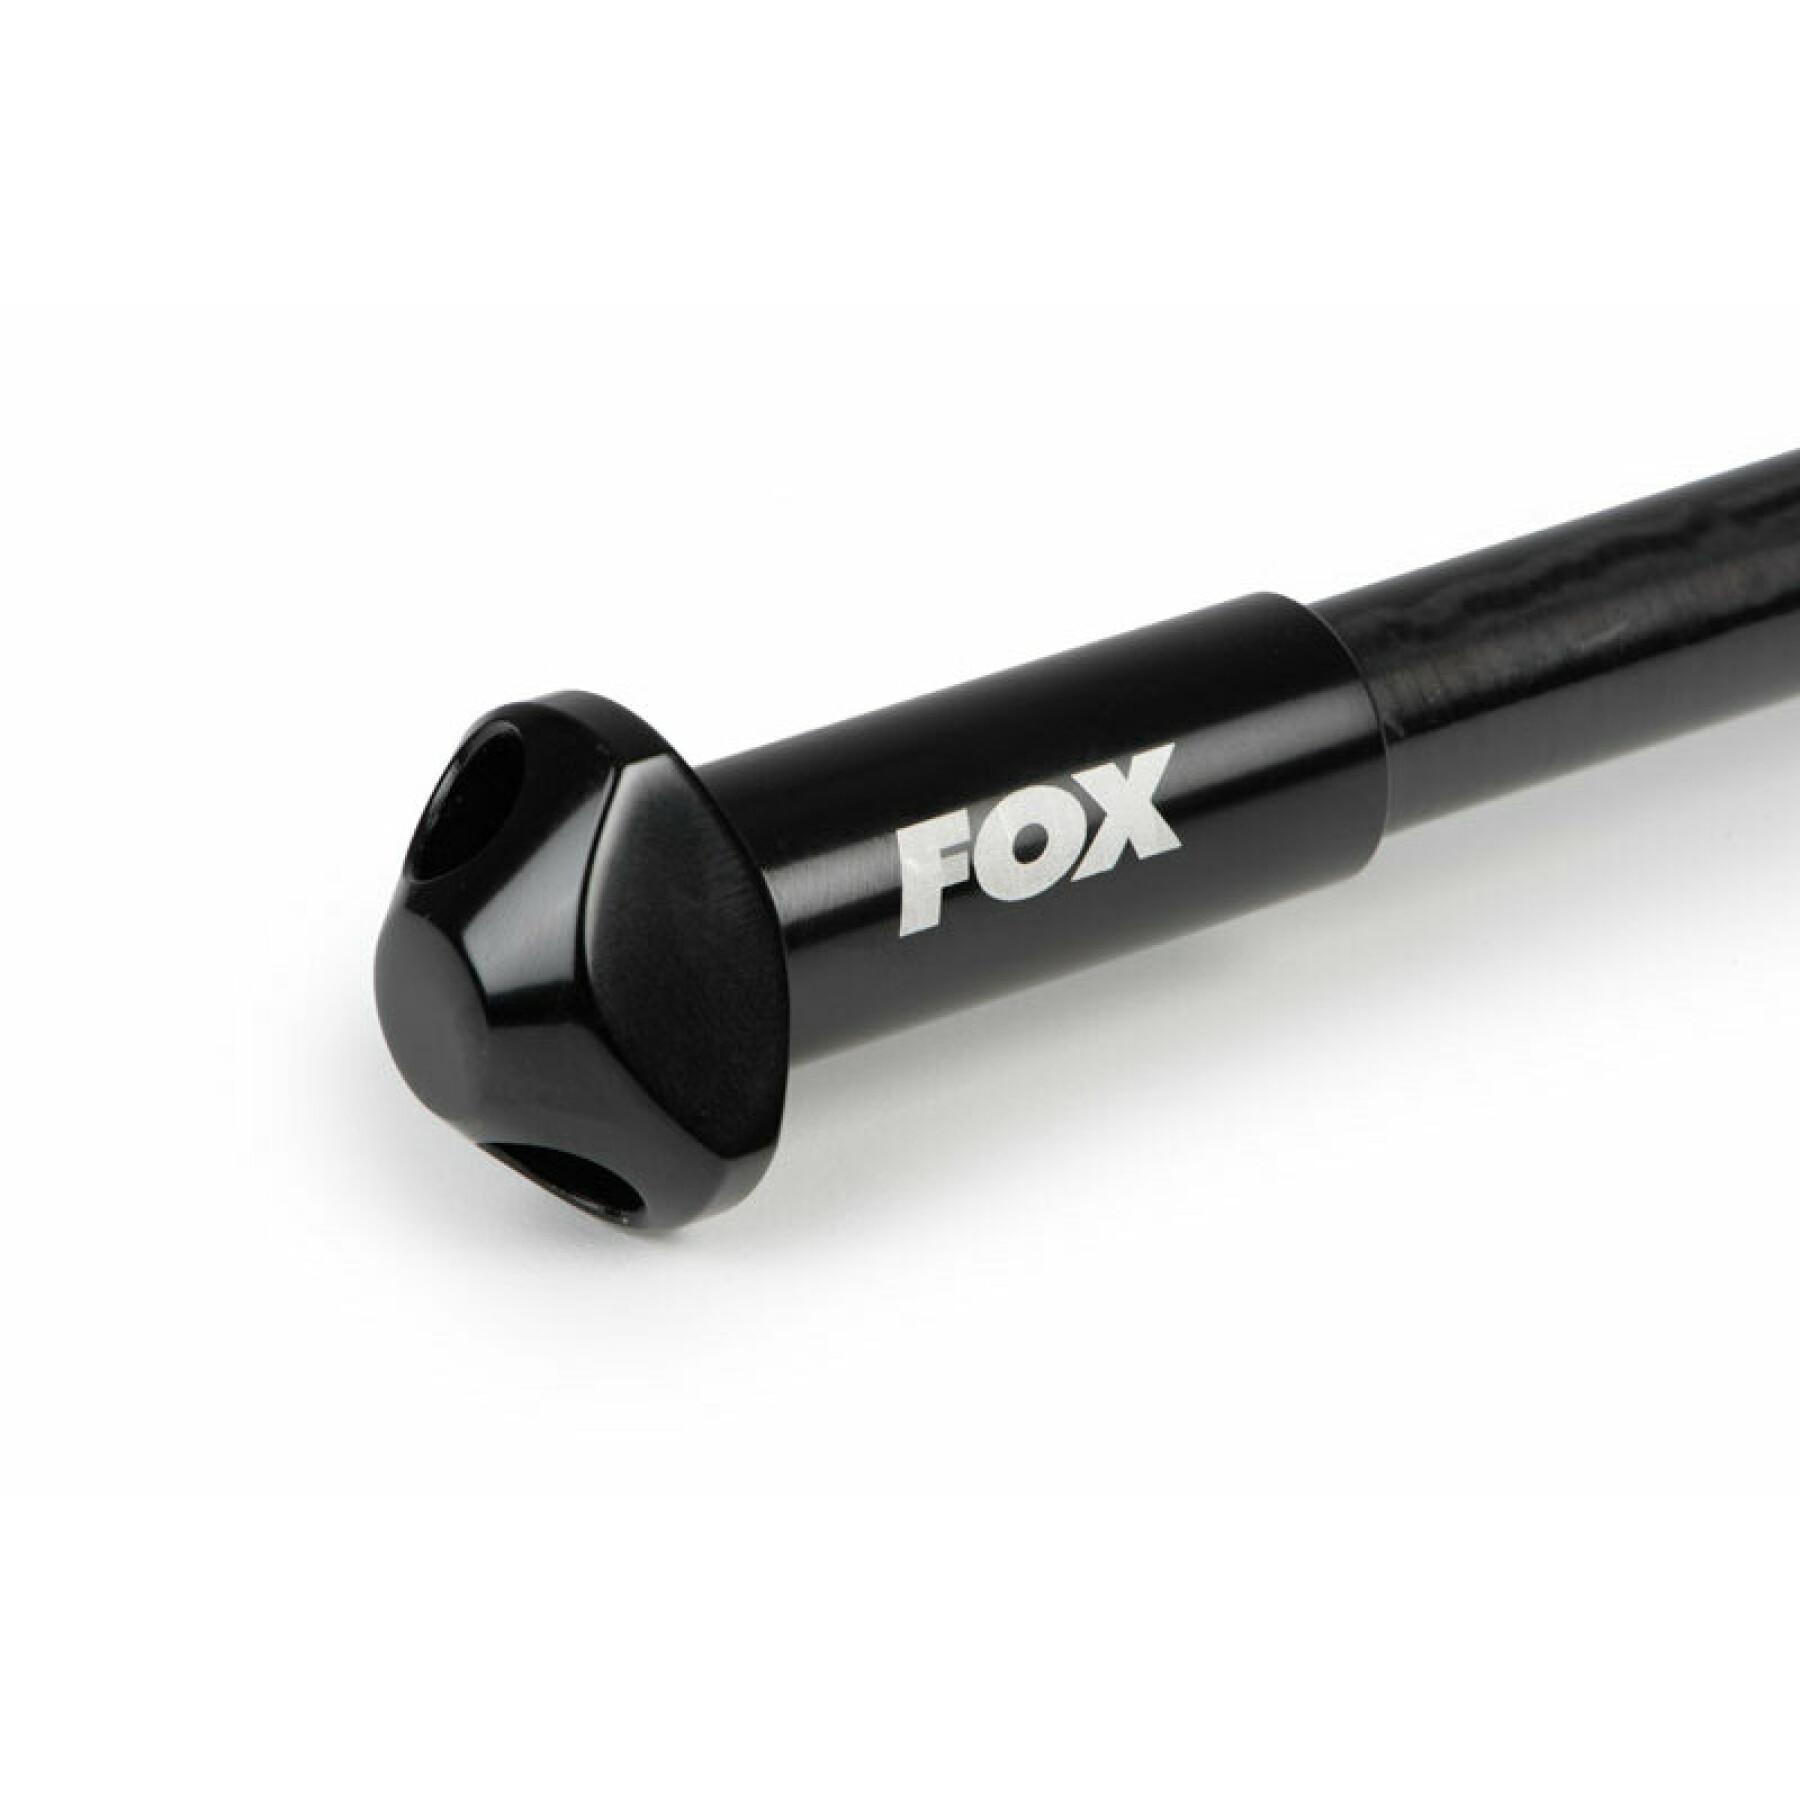 Horizon net Fox X4 46"